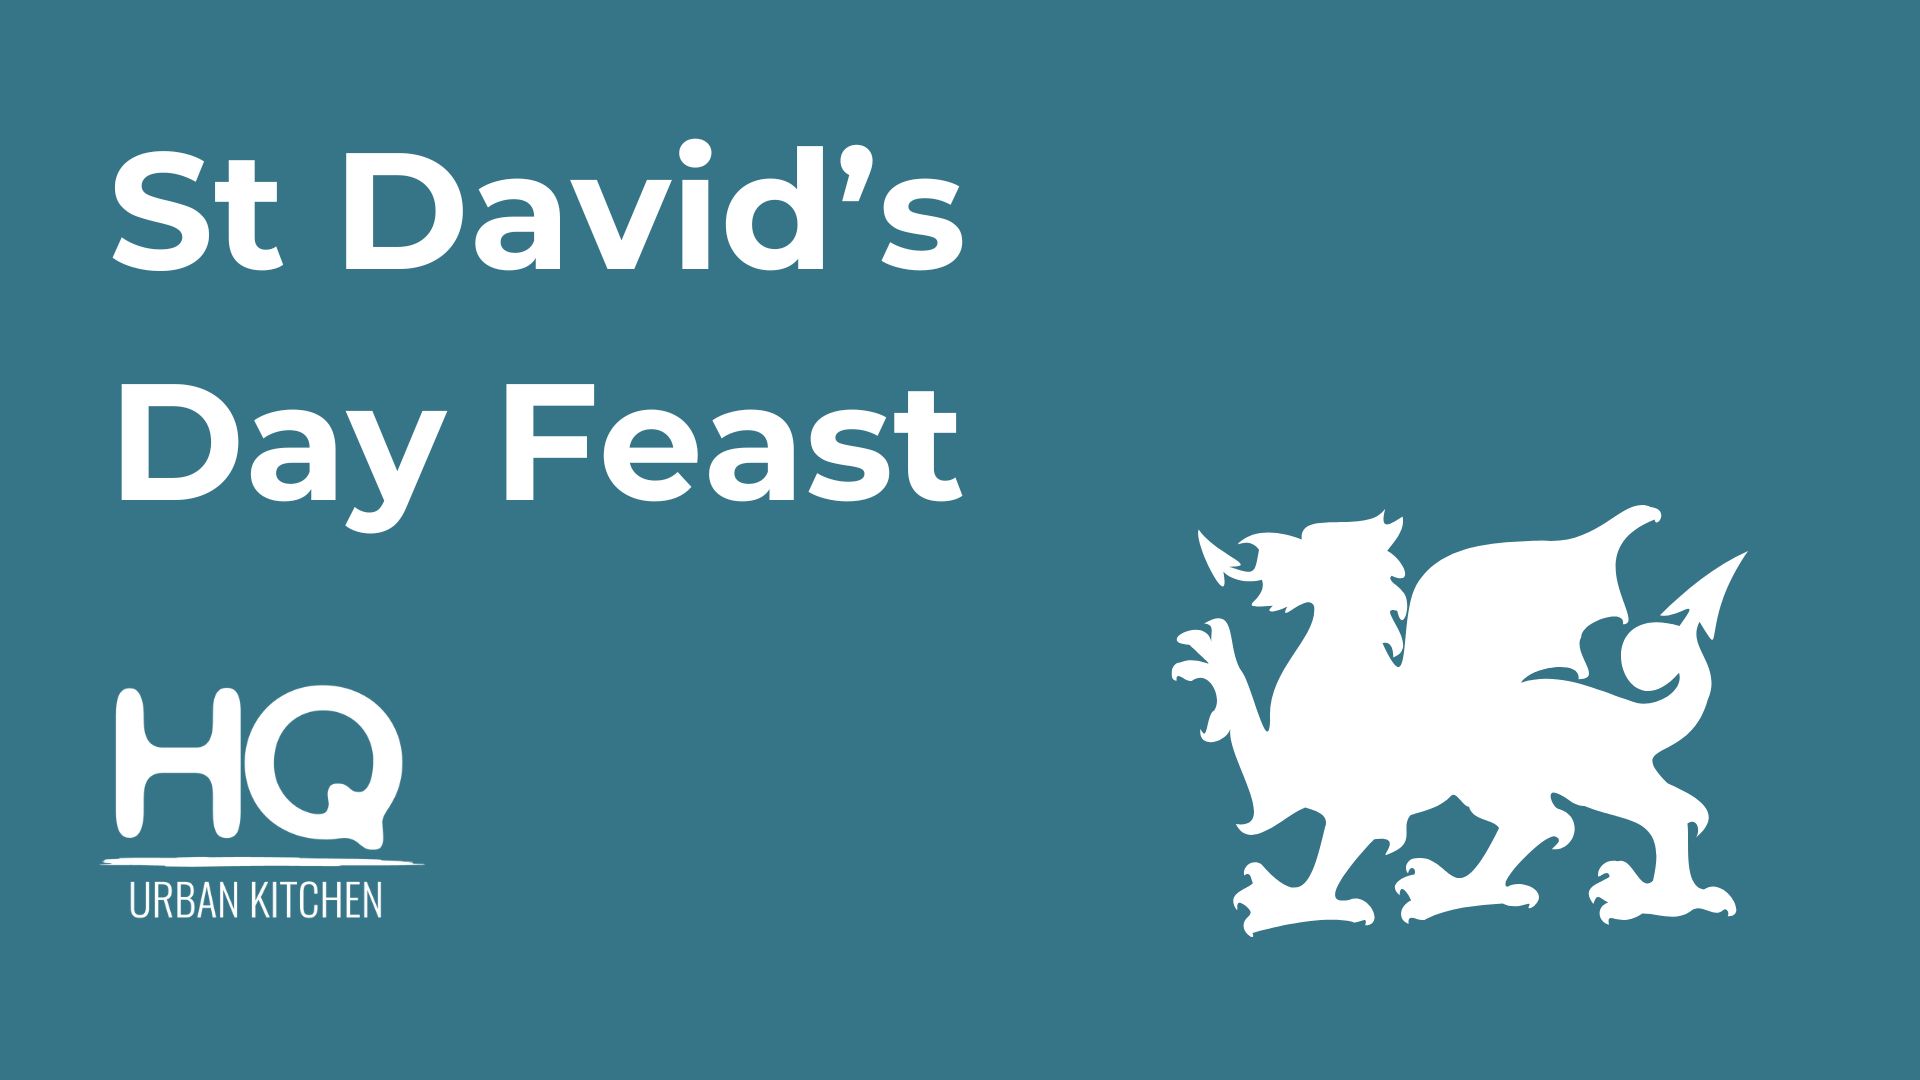 St David’s Day Feast